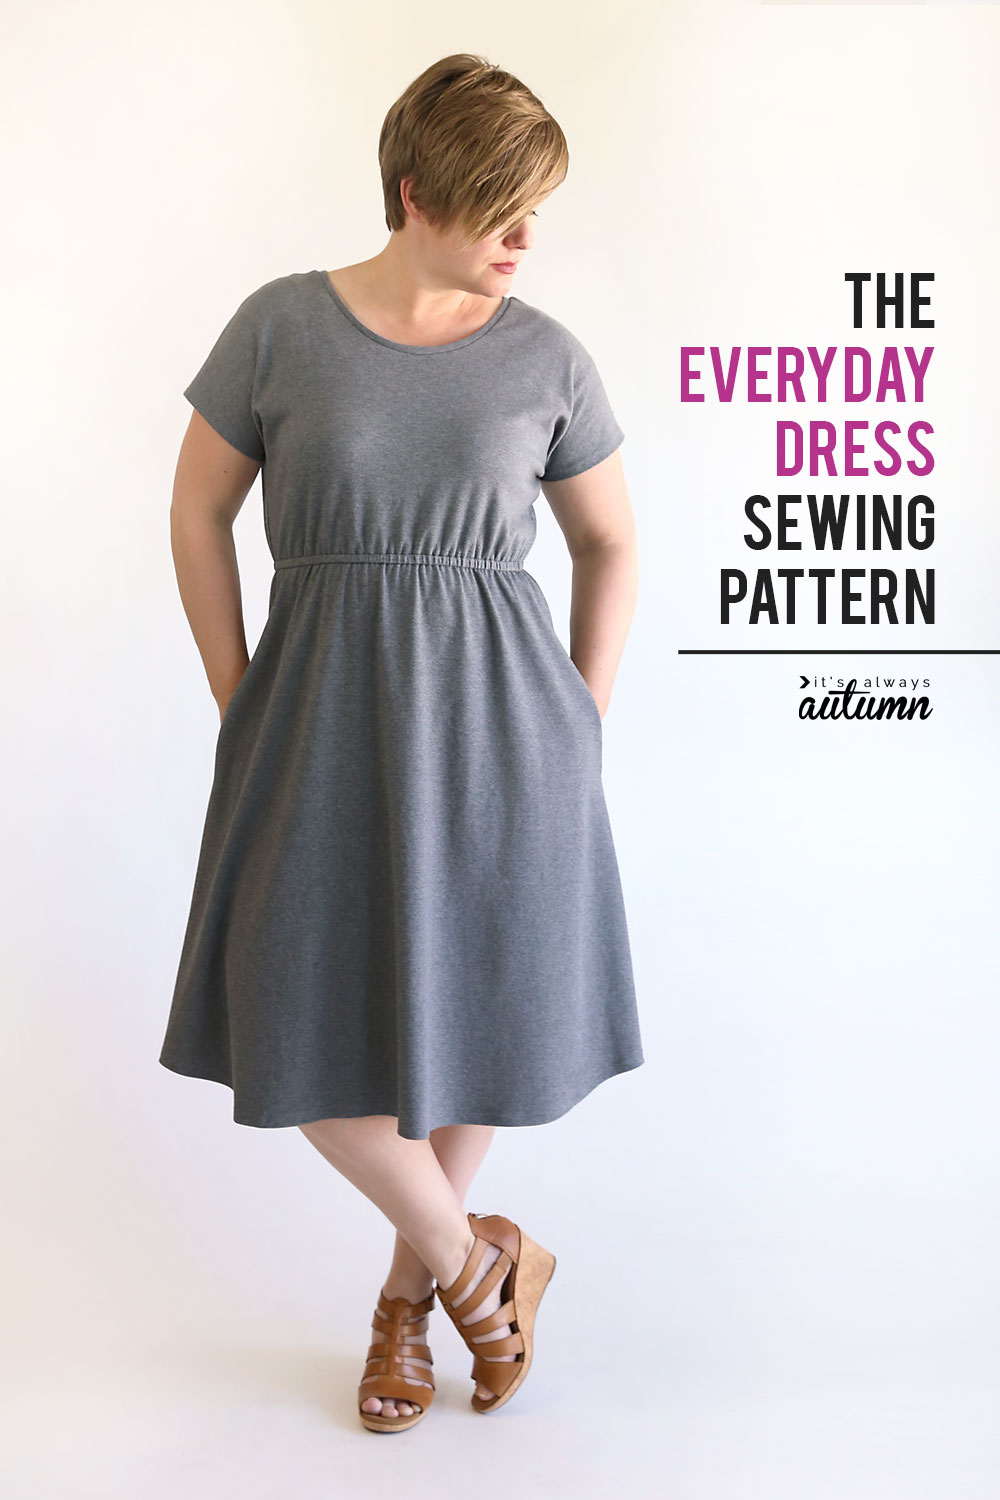 Ladies' Sew Basic Dress Pattern